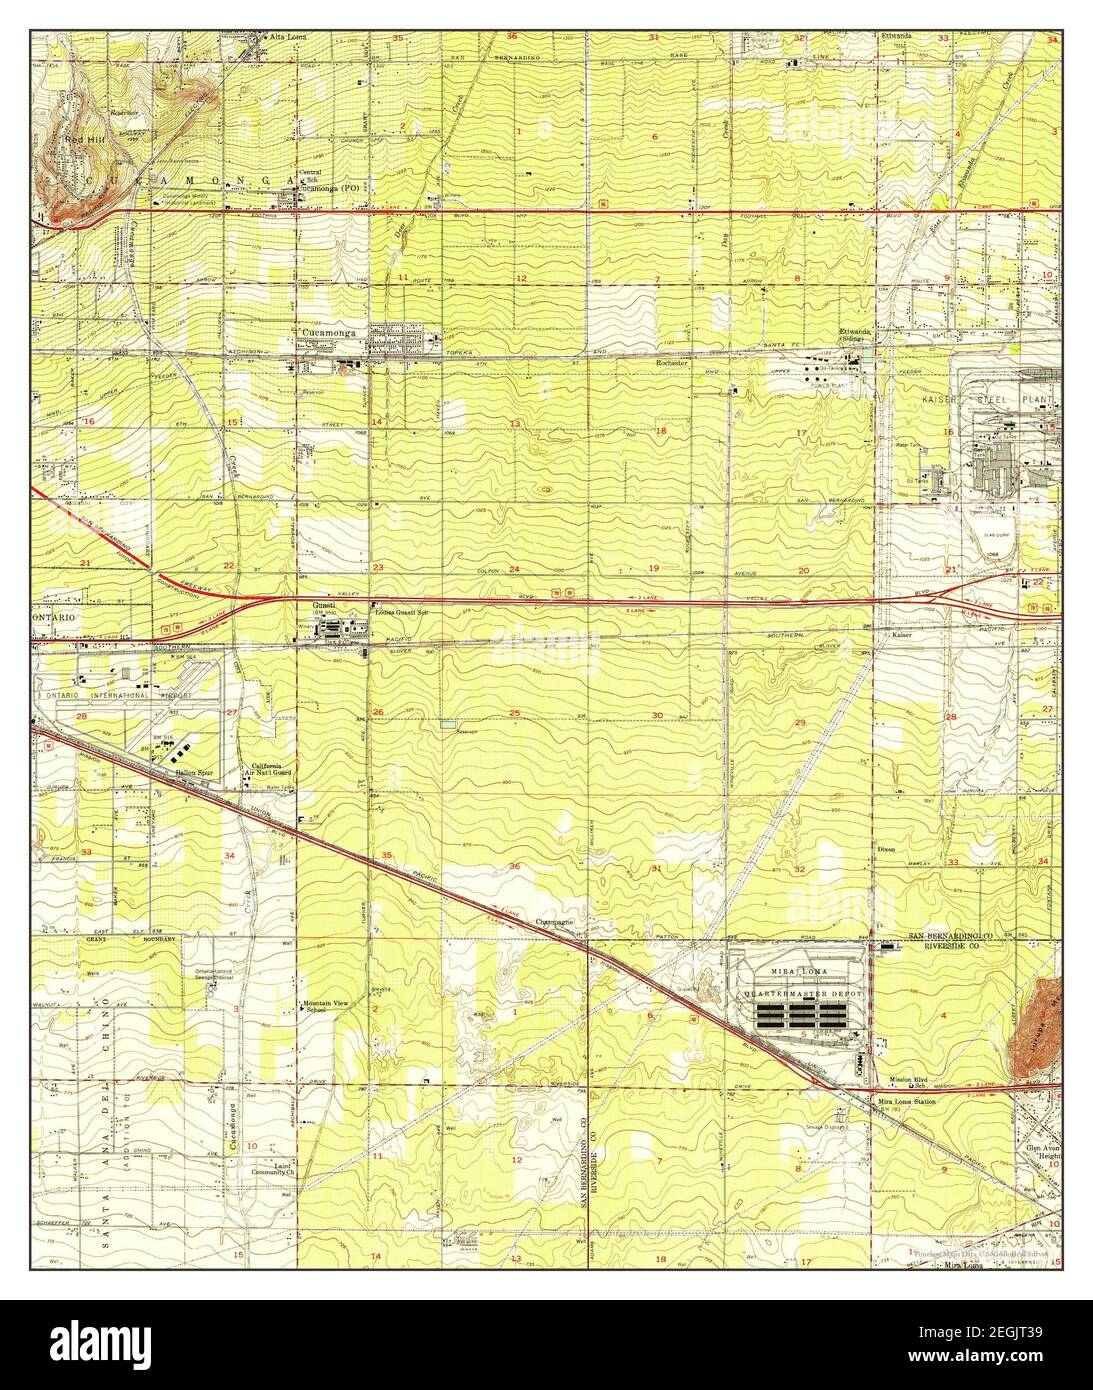 Guasti, California, map 1953, 1:24000, United States of America by Timeless Maps, data U.S. Geological Survey Stock Photo